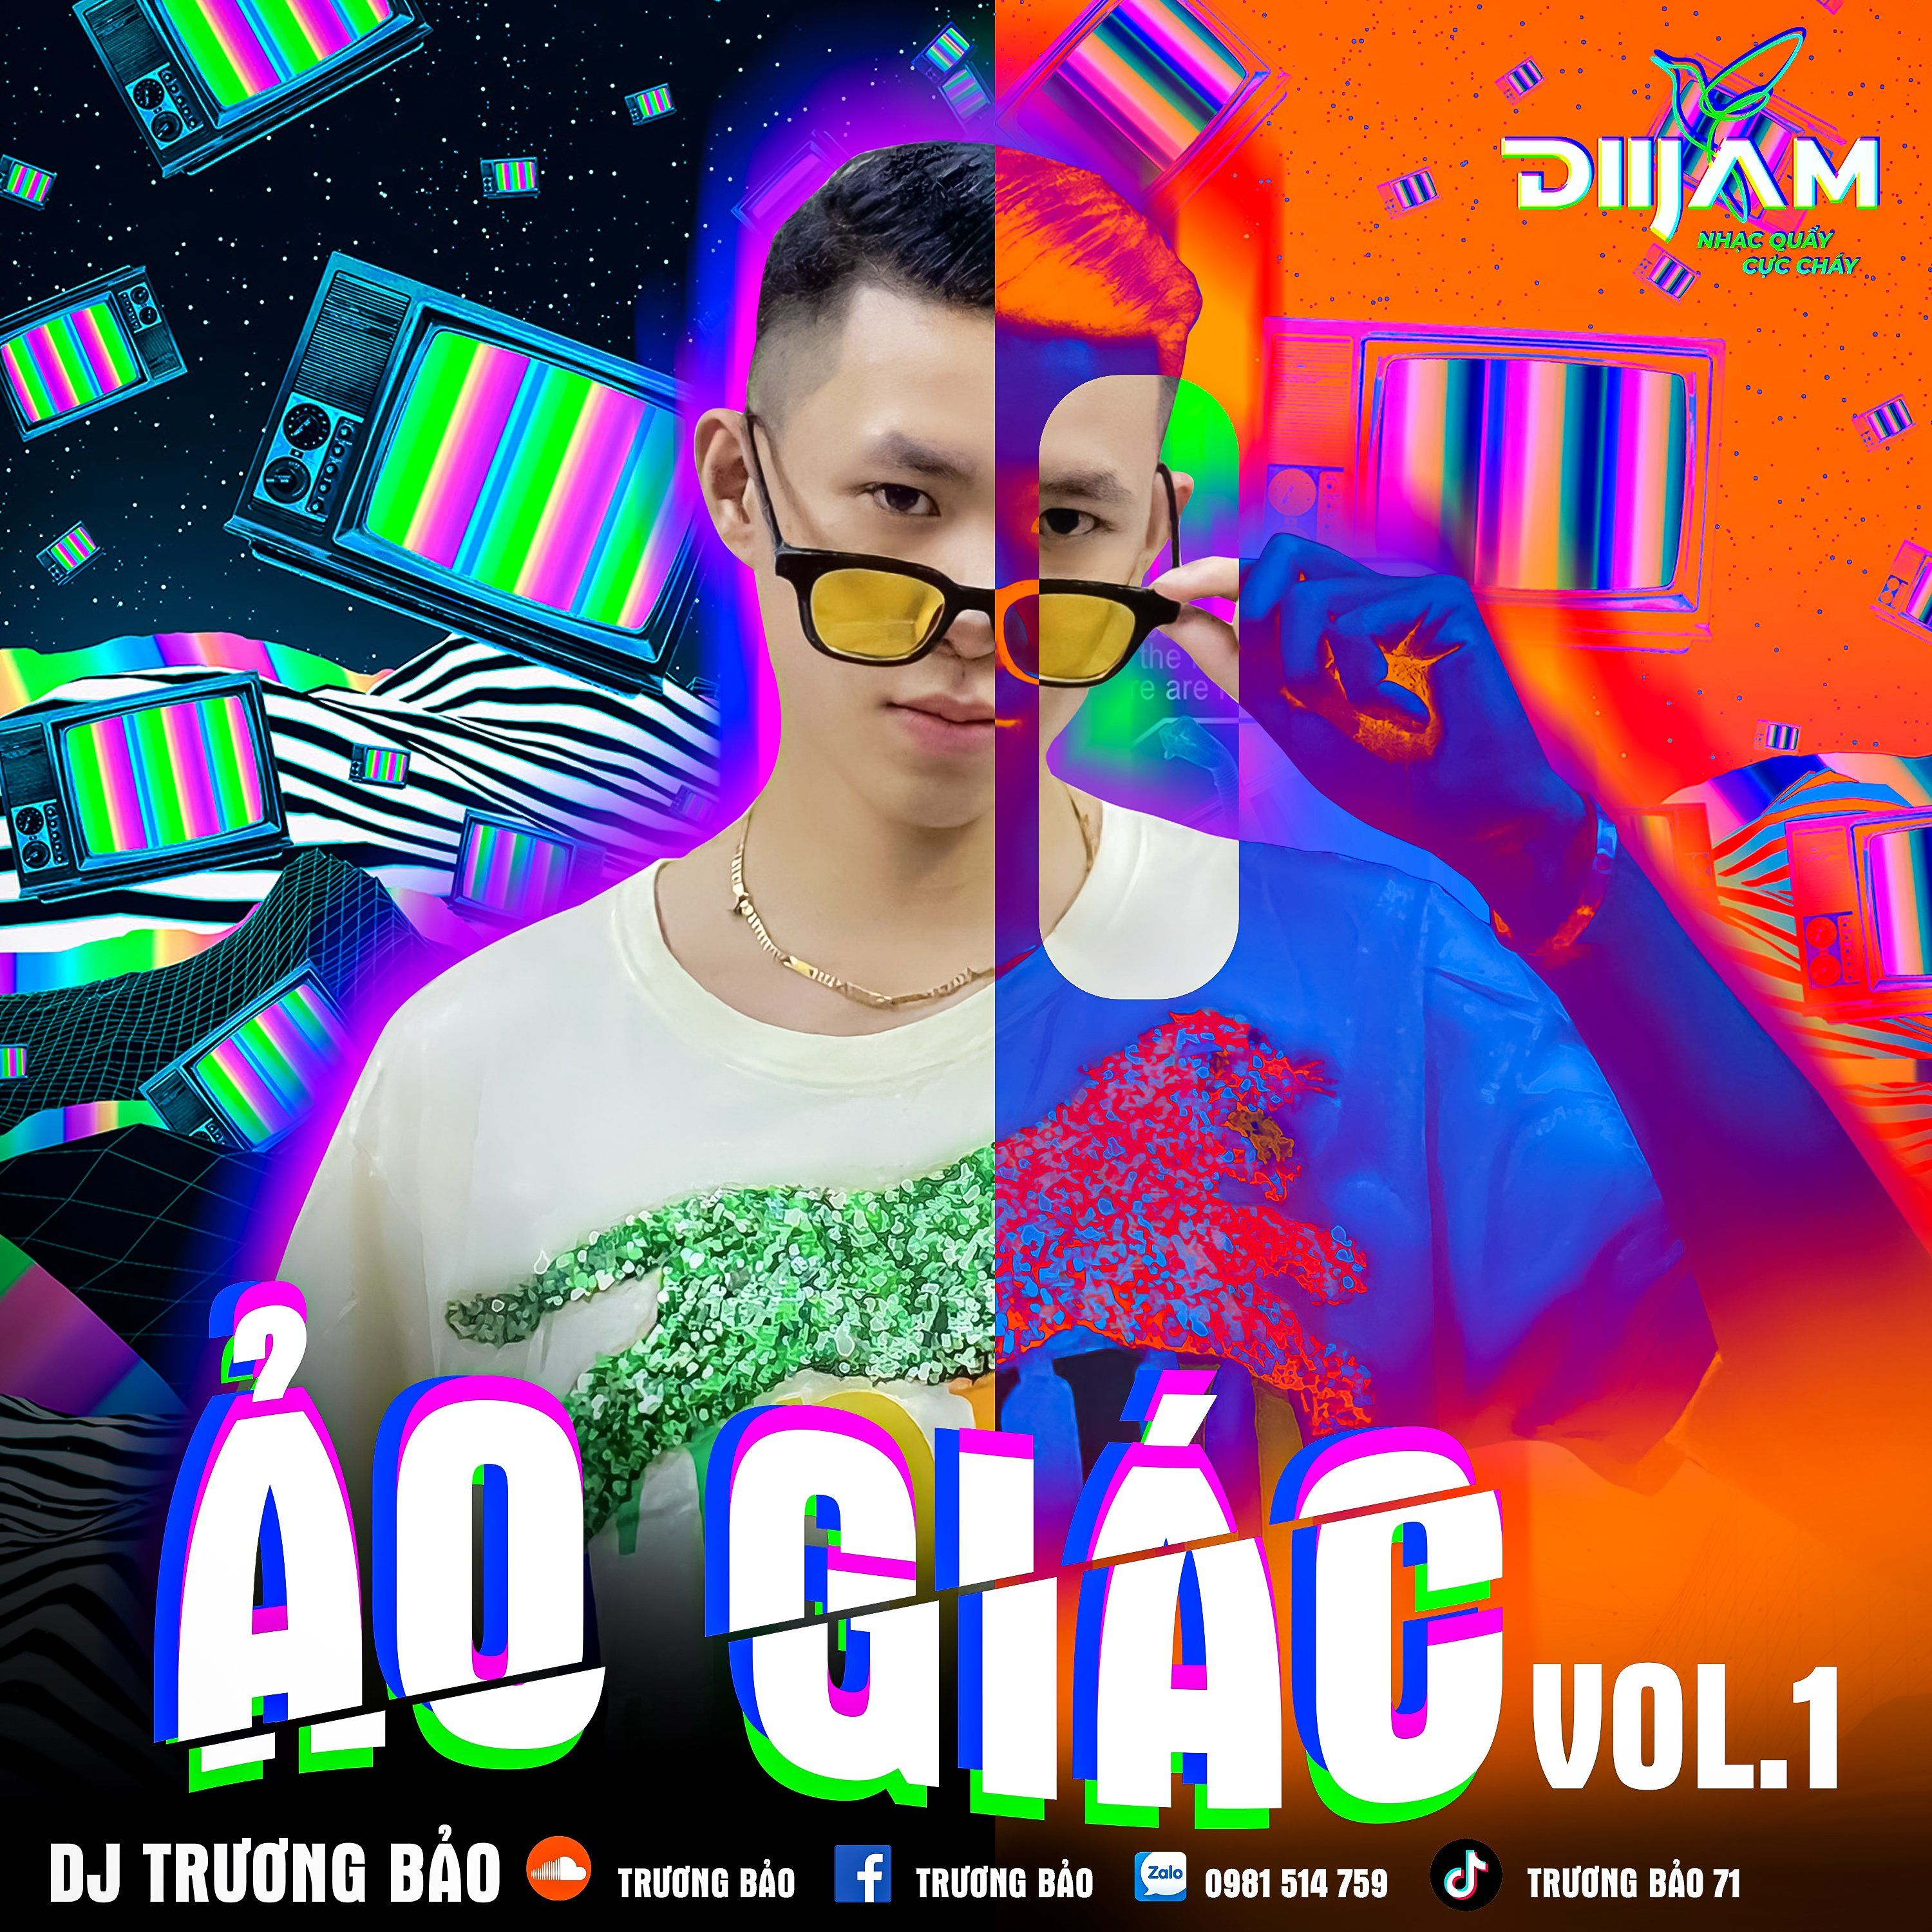 Download Ảo Giác Vol 1 - DJ Trương Bảo (Nonstop Diijam)